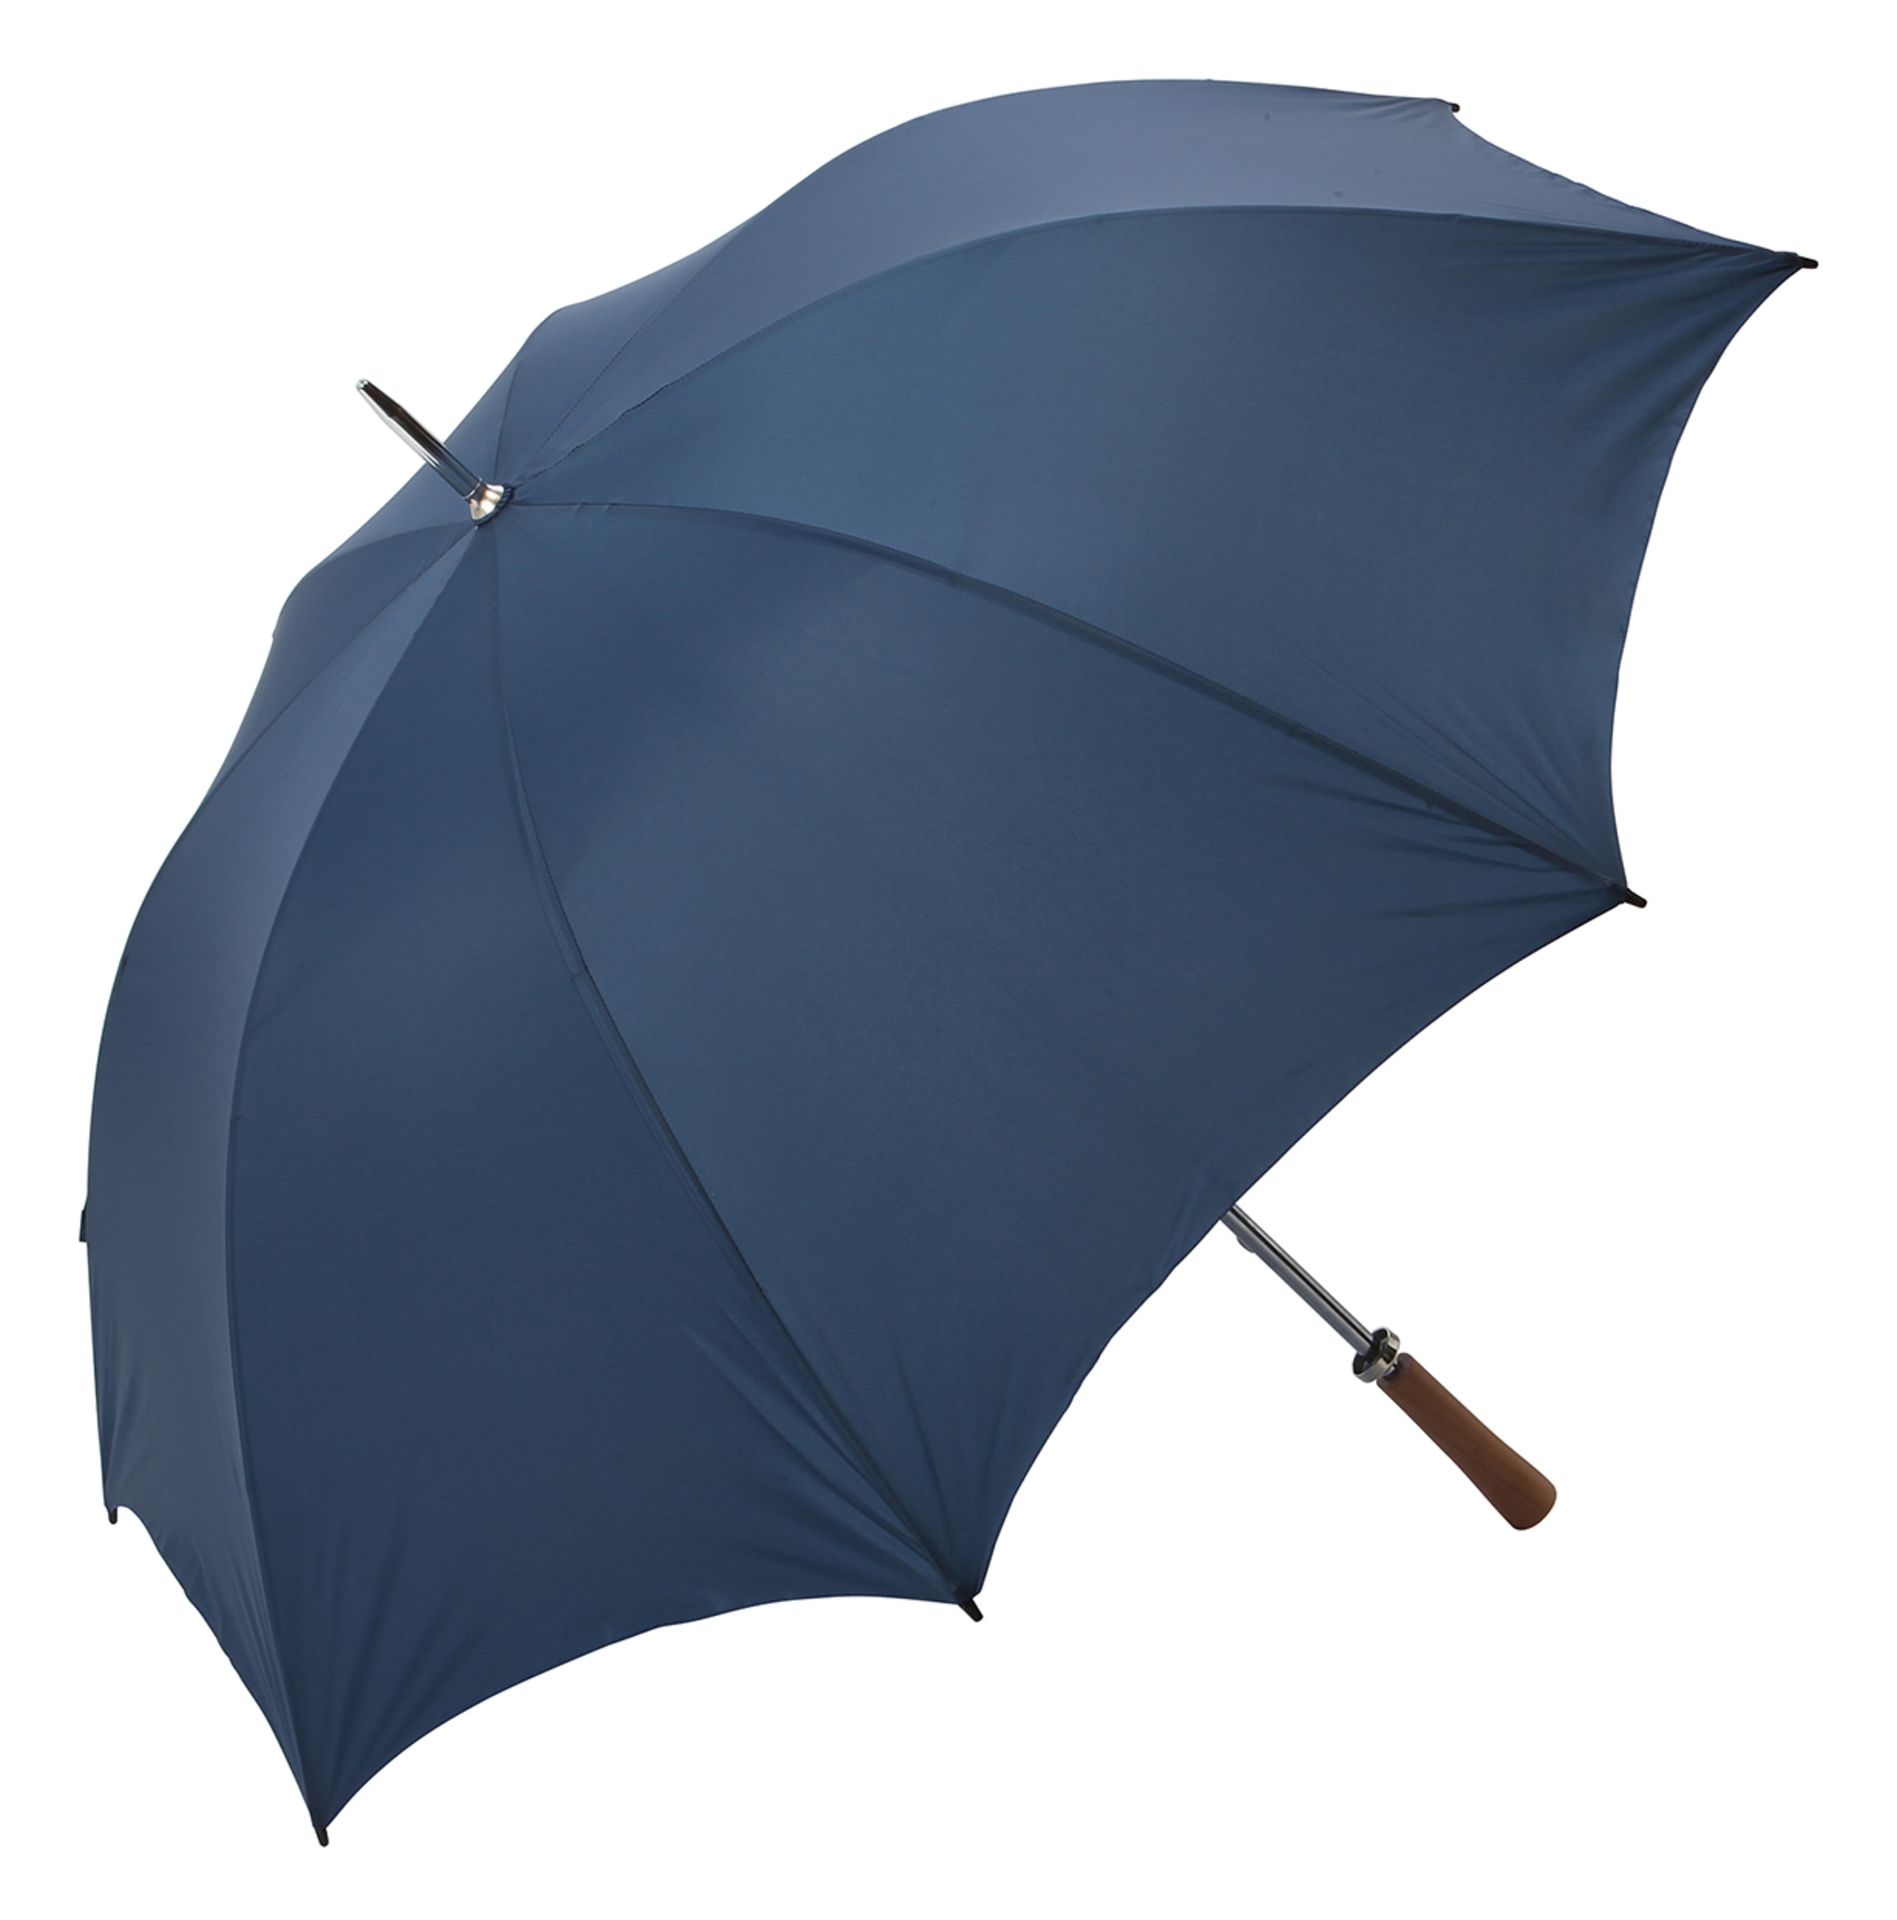 24 x Full size Golf Umbrellas Navy Blue